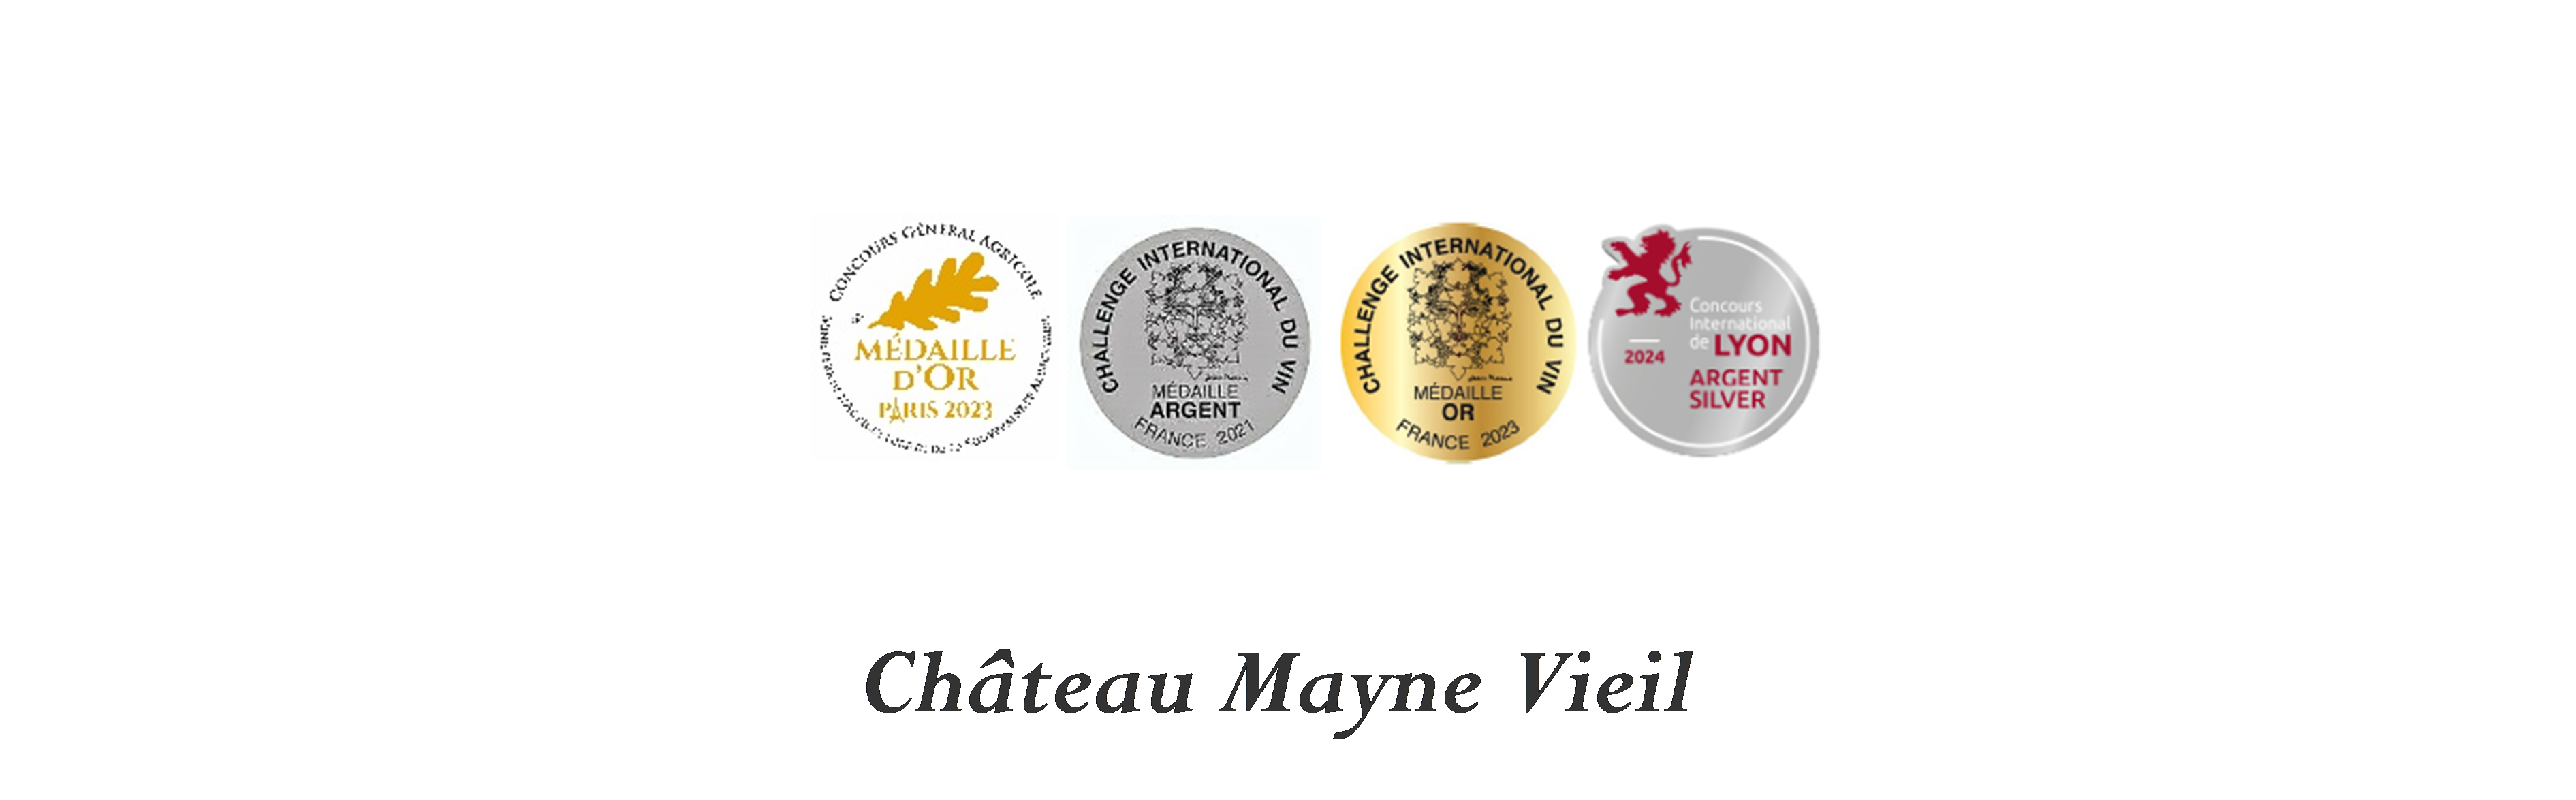 Mdaille_Mayne_Vieil Chateau Mayne-Vieil - Palmarès des Médailles